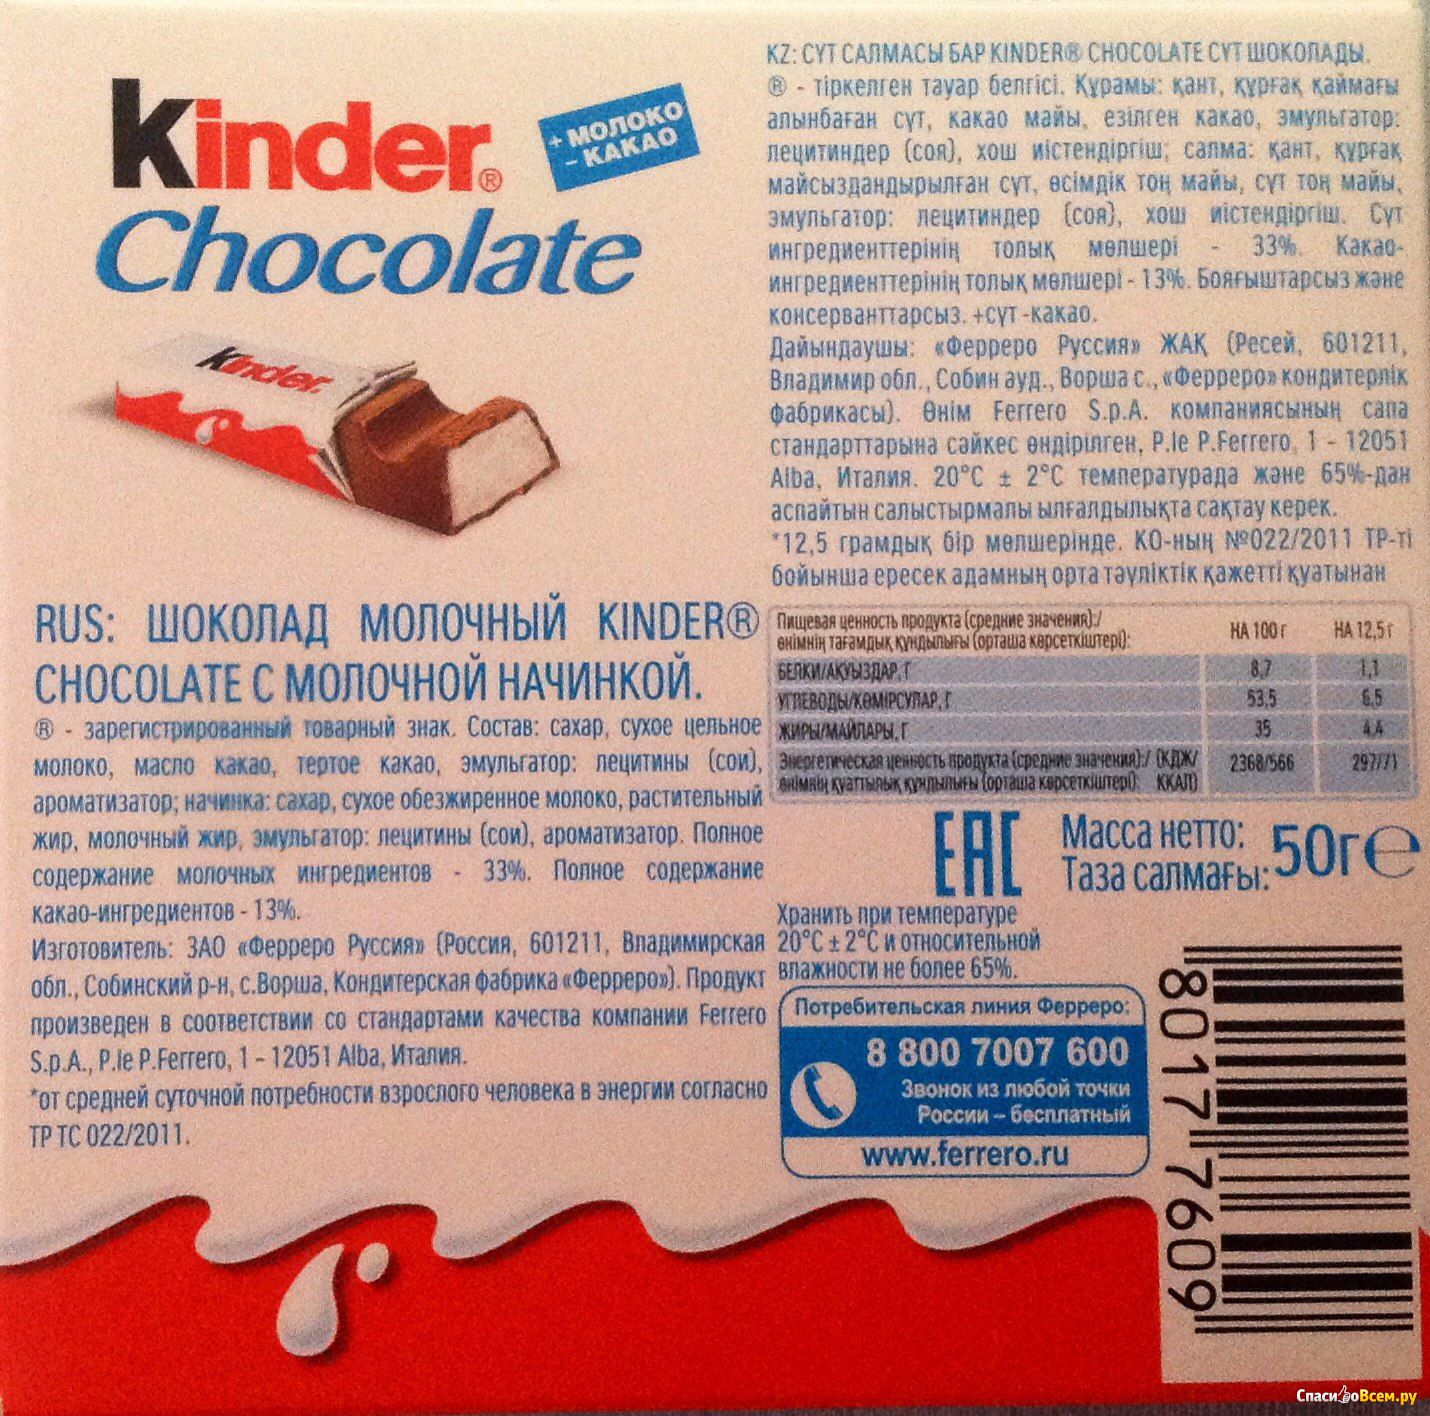 Киндер калорийность 1. Киндер шоколад макси вес 1 шоколадки. Киндер шоколад 4 калорийность. Киндер шоколад калорийность 100 грамм.